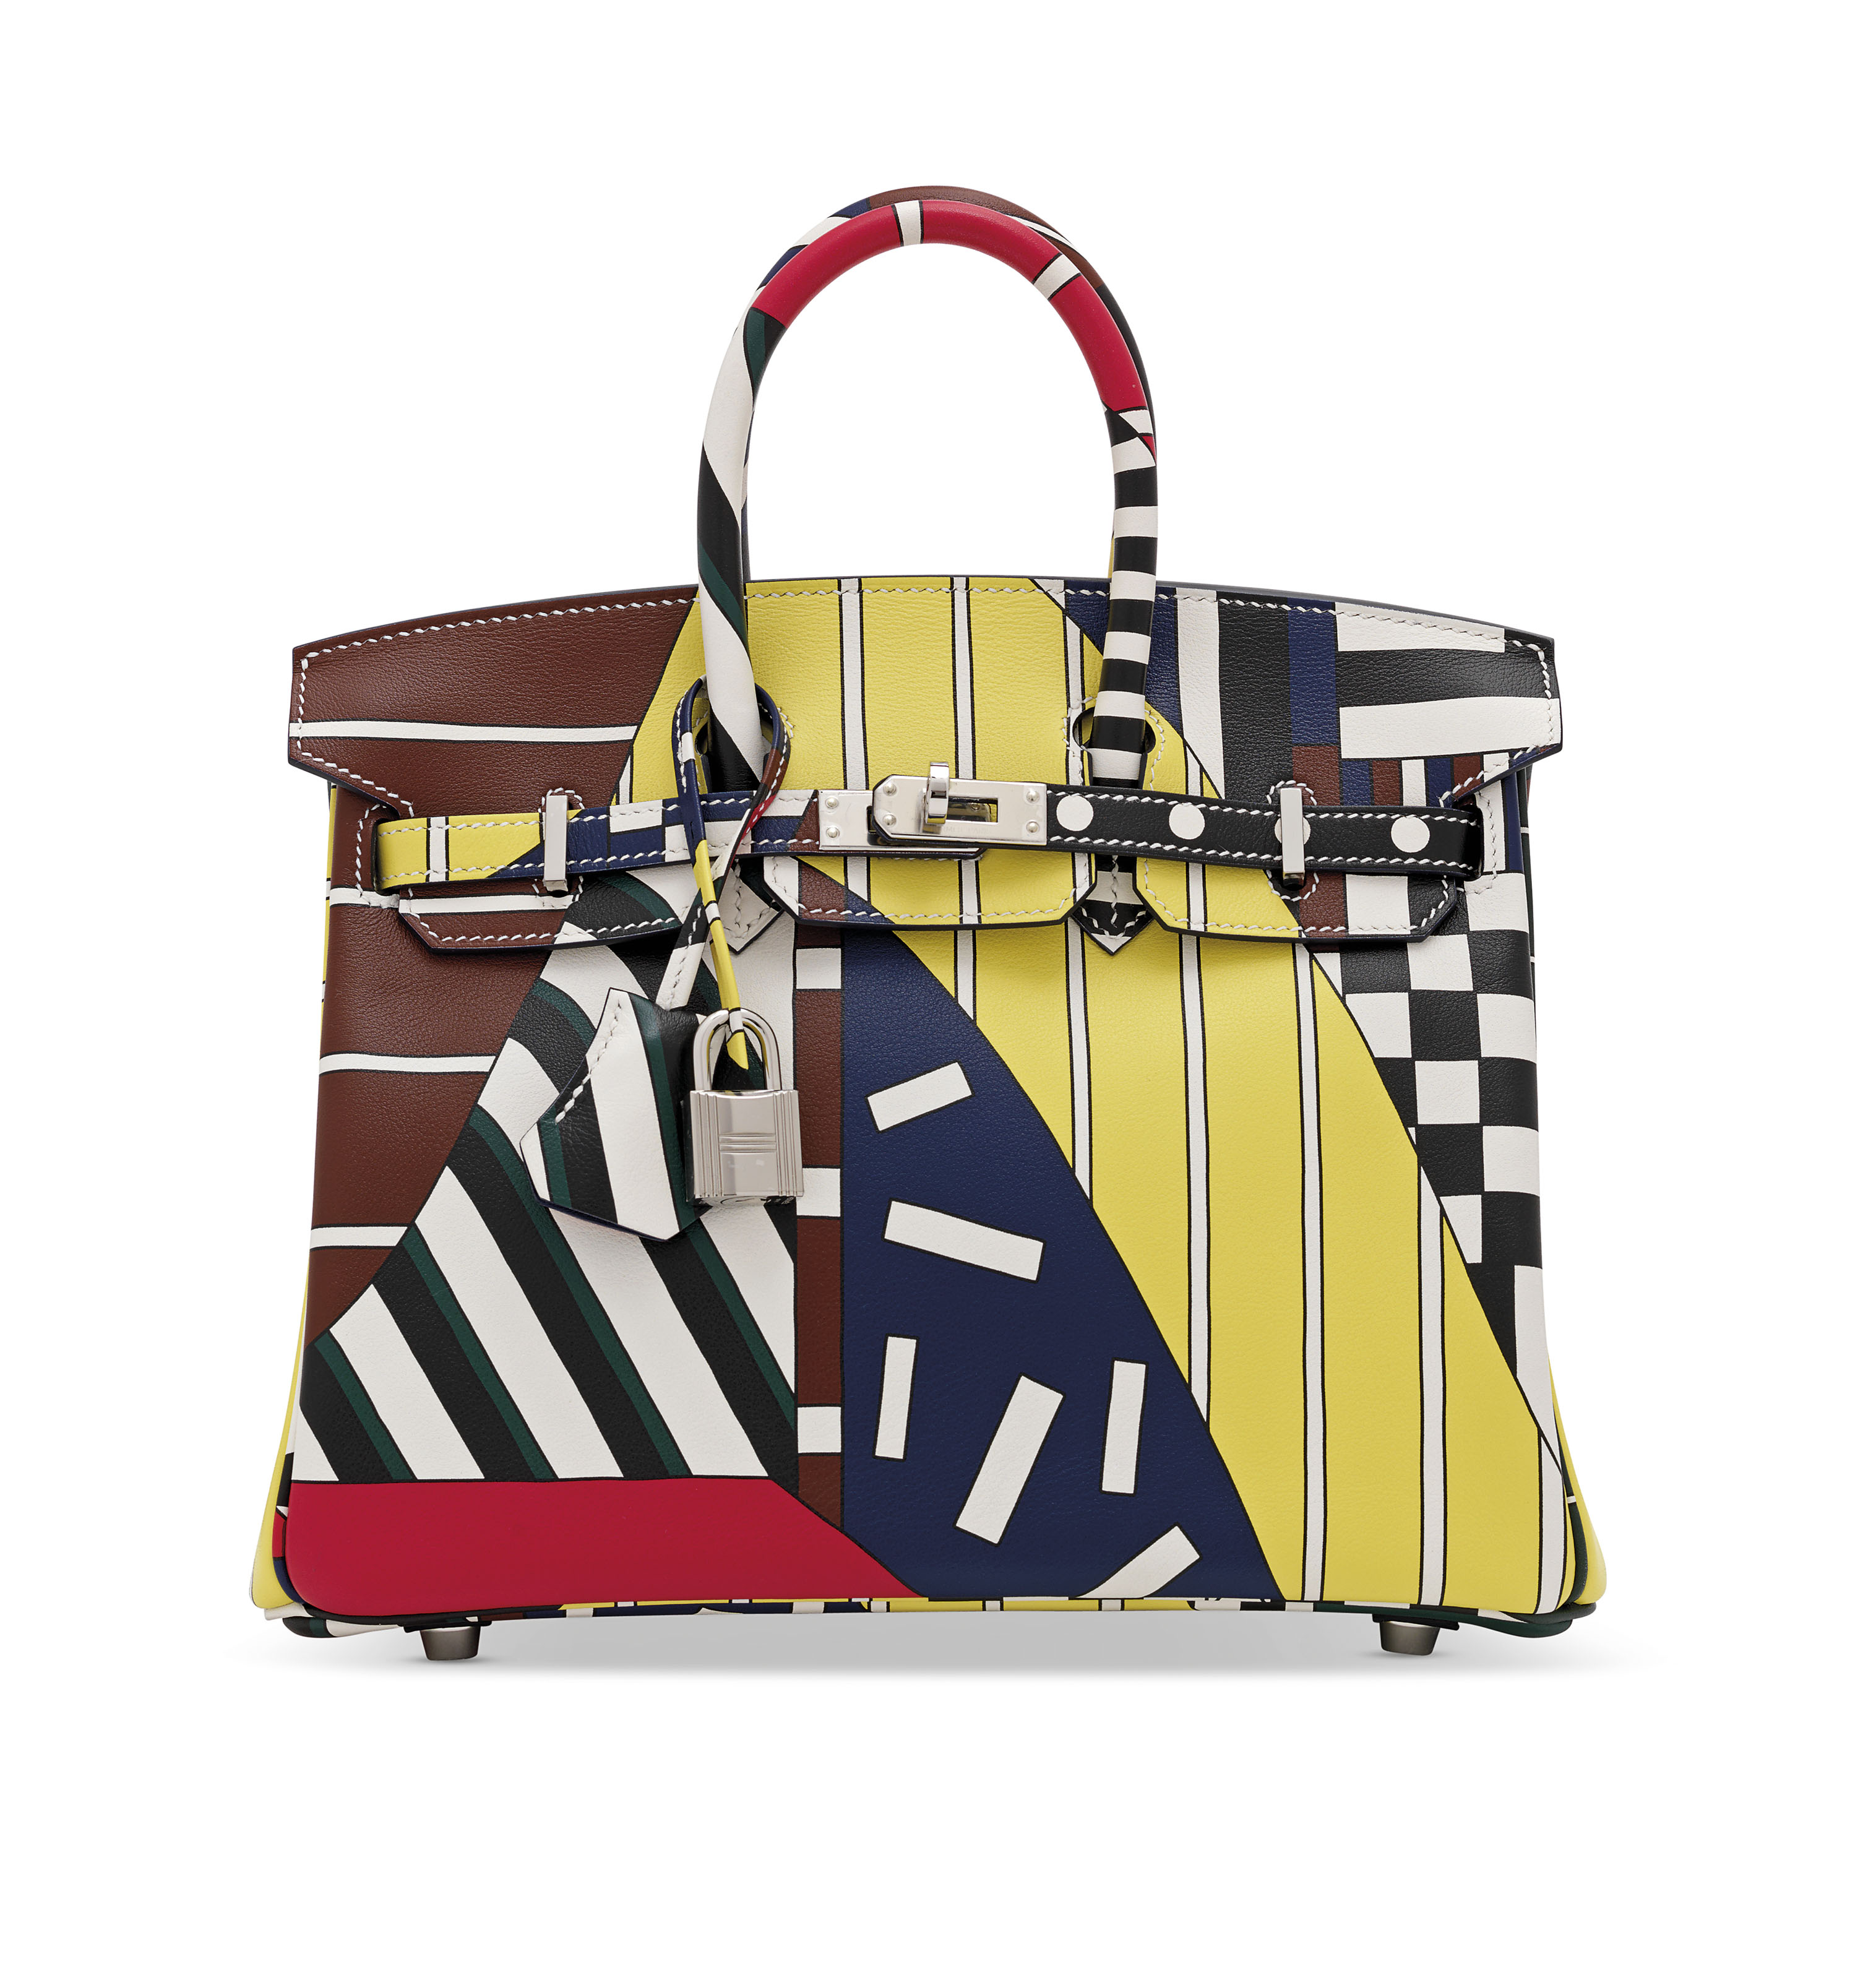 The Hermès Birkin Reigns as the Most-Coveted Luxury Handbag